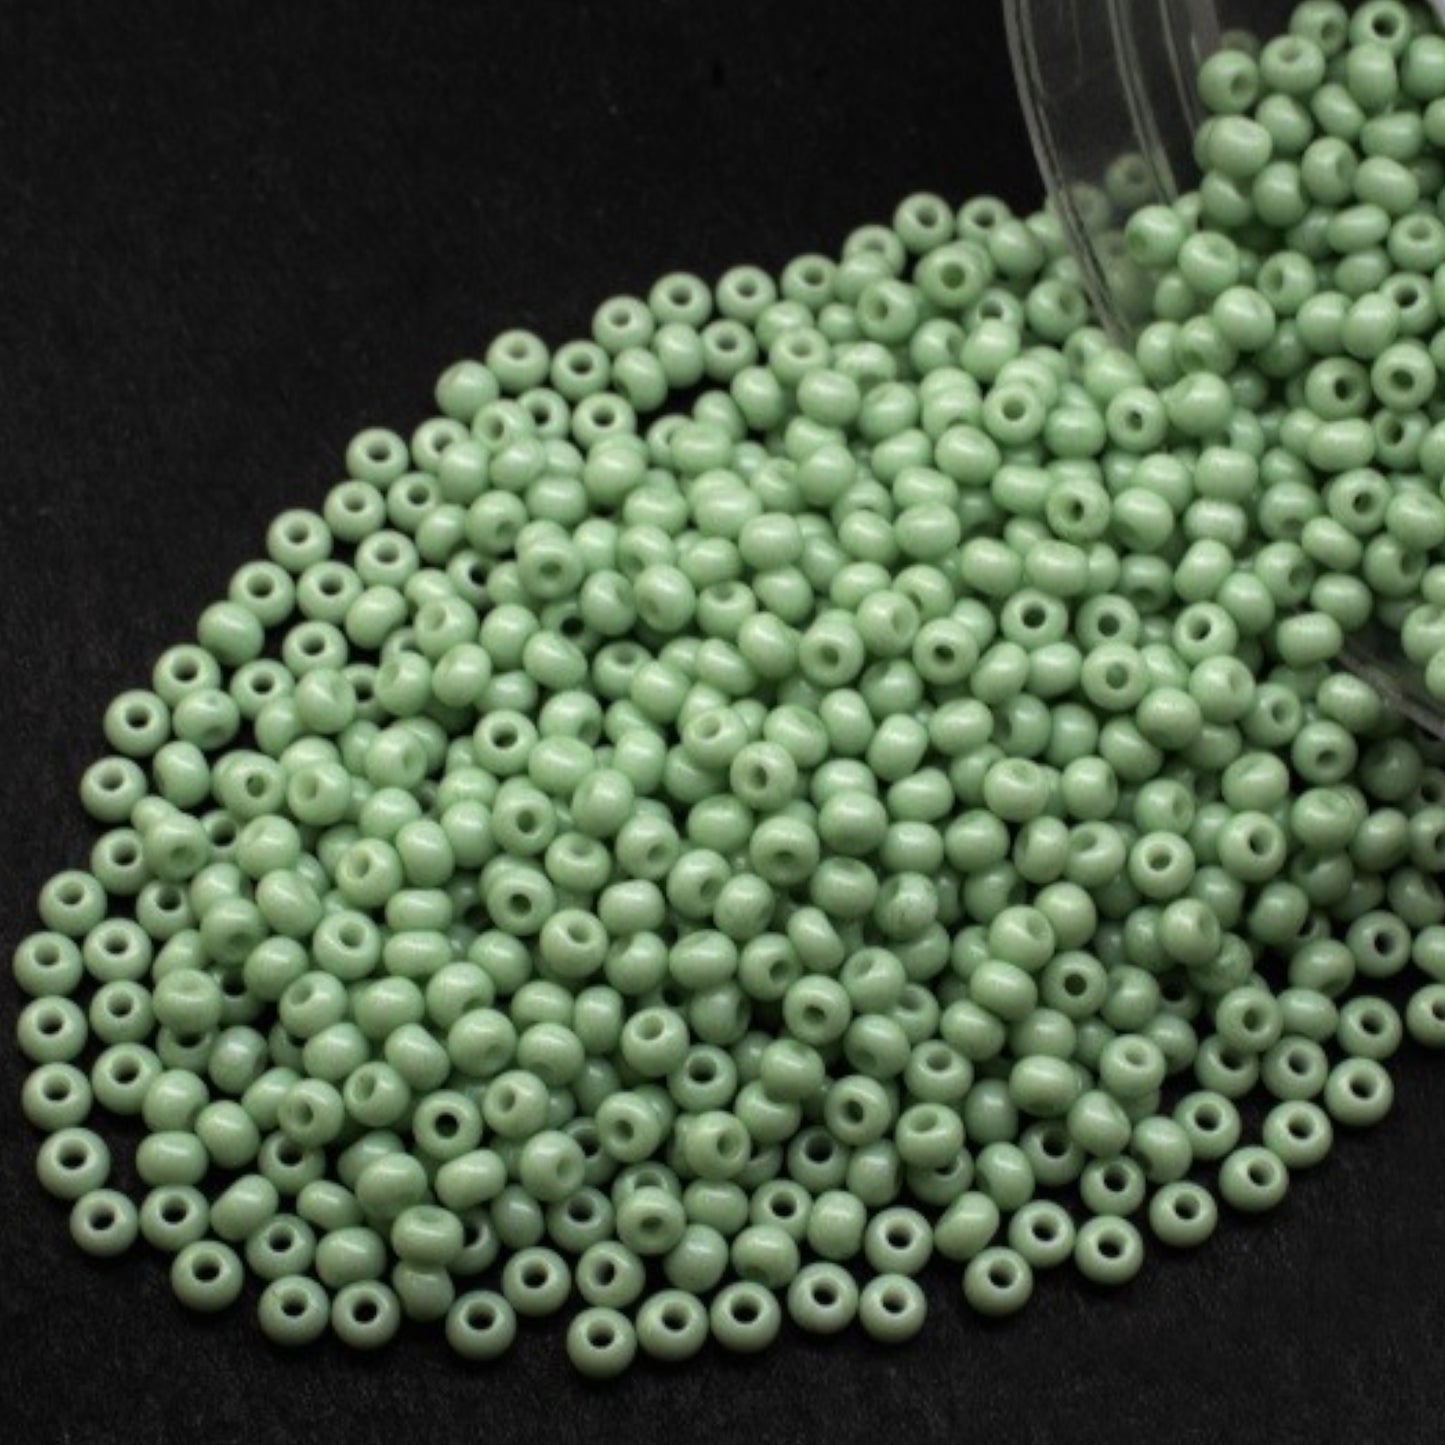 03662 Czech seed beads PRECIOSA round 10/0 light light green grey. Chalk - Solgel Dyed.